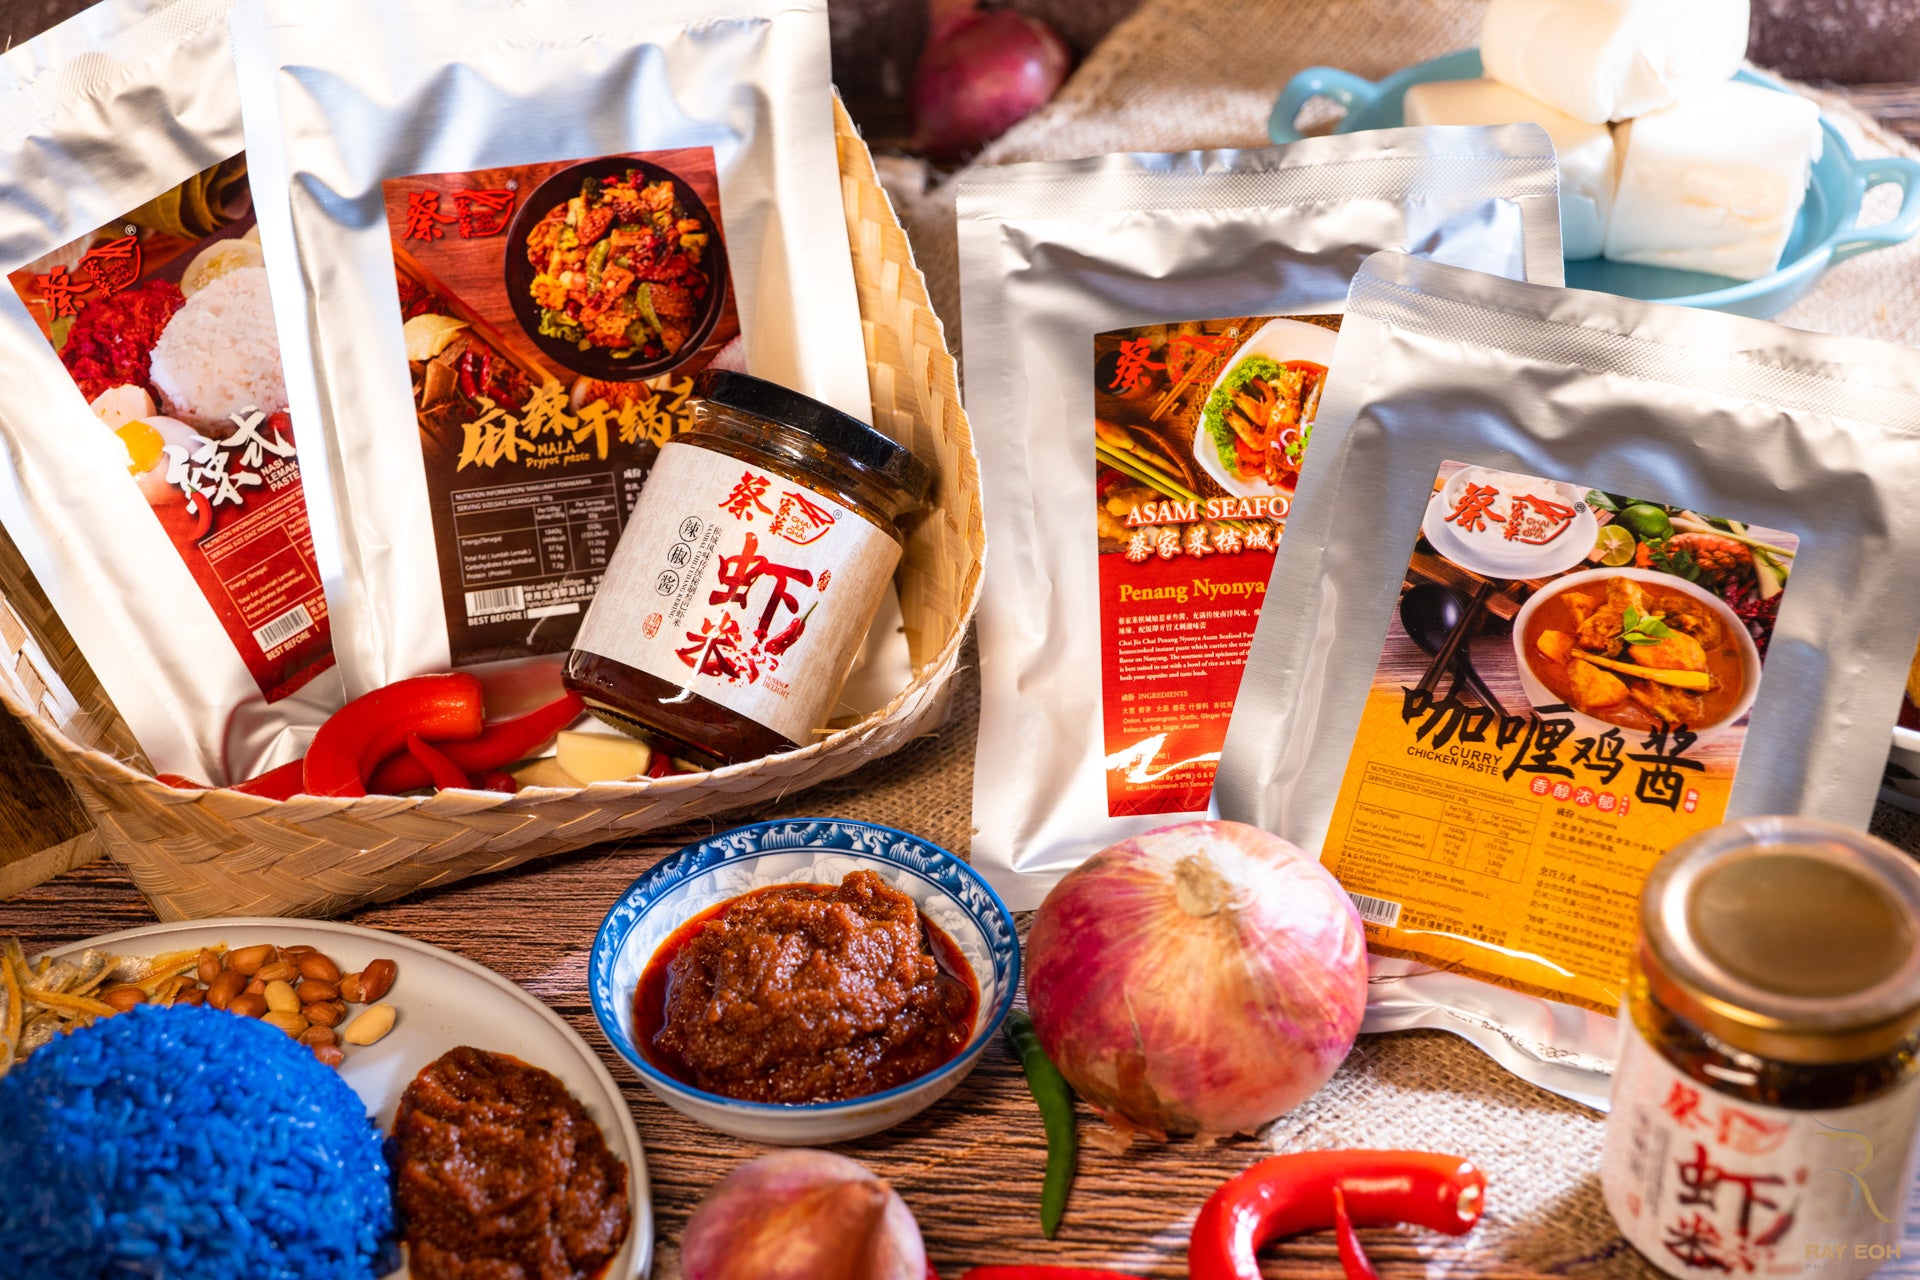 Food Product: Chai Jia Chai 蔡家菜